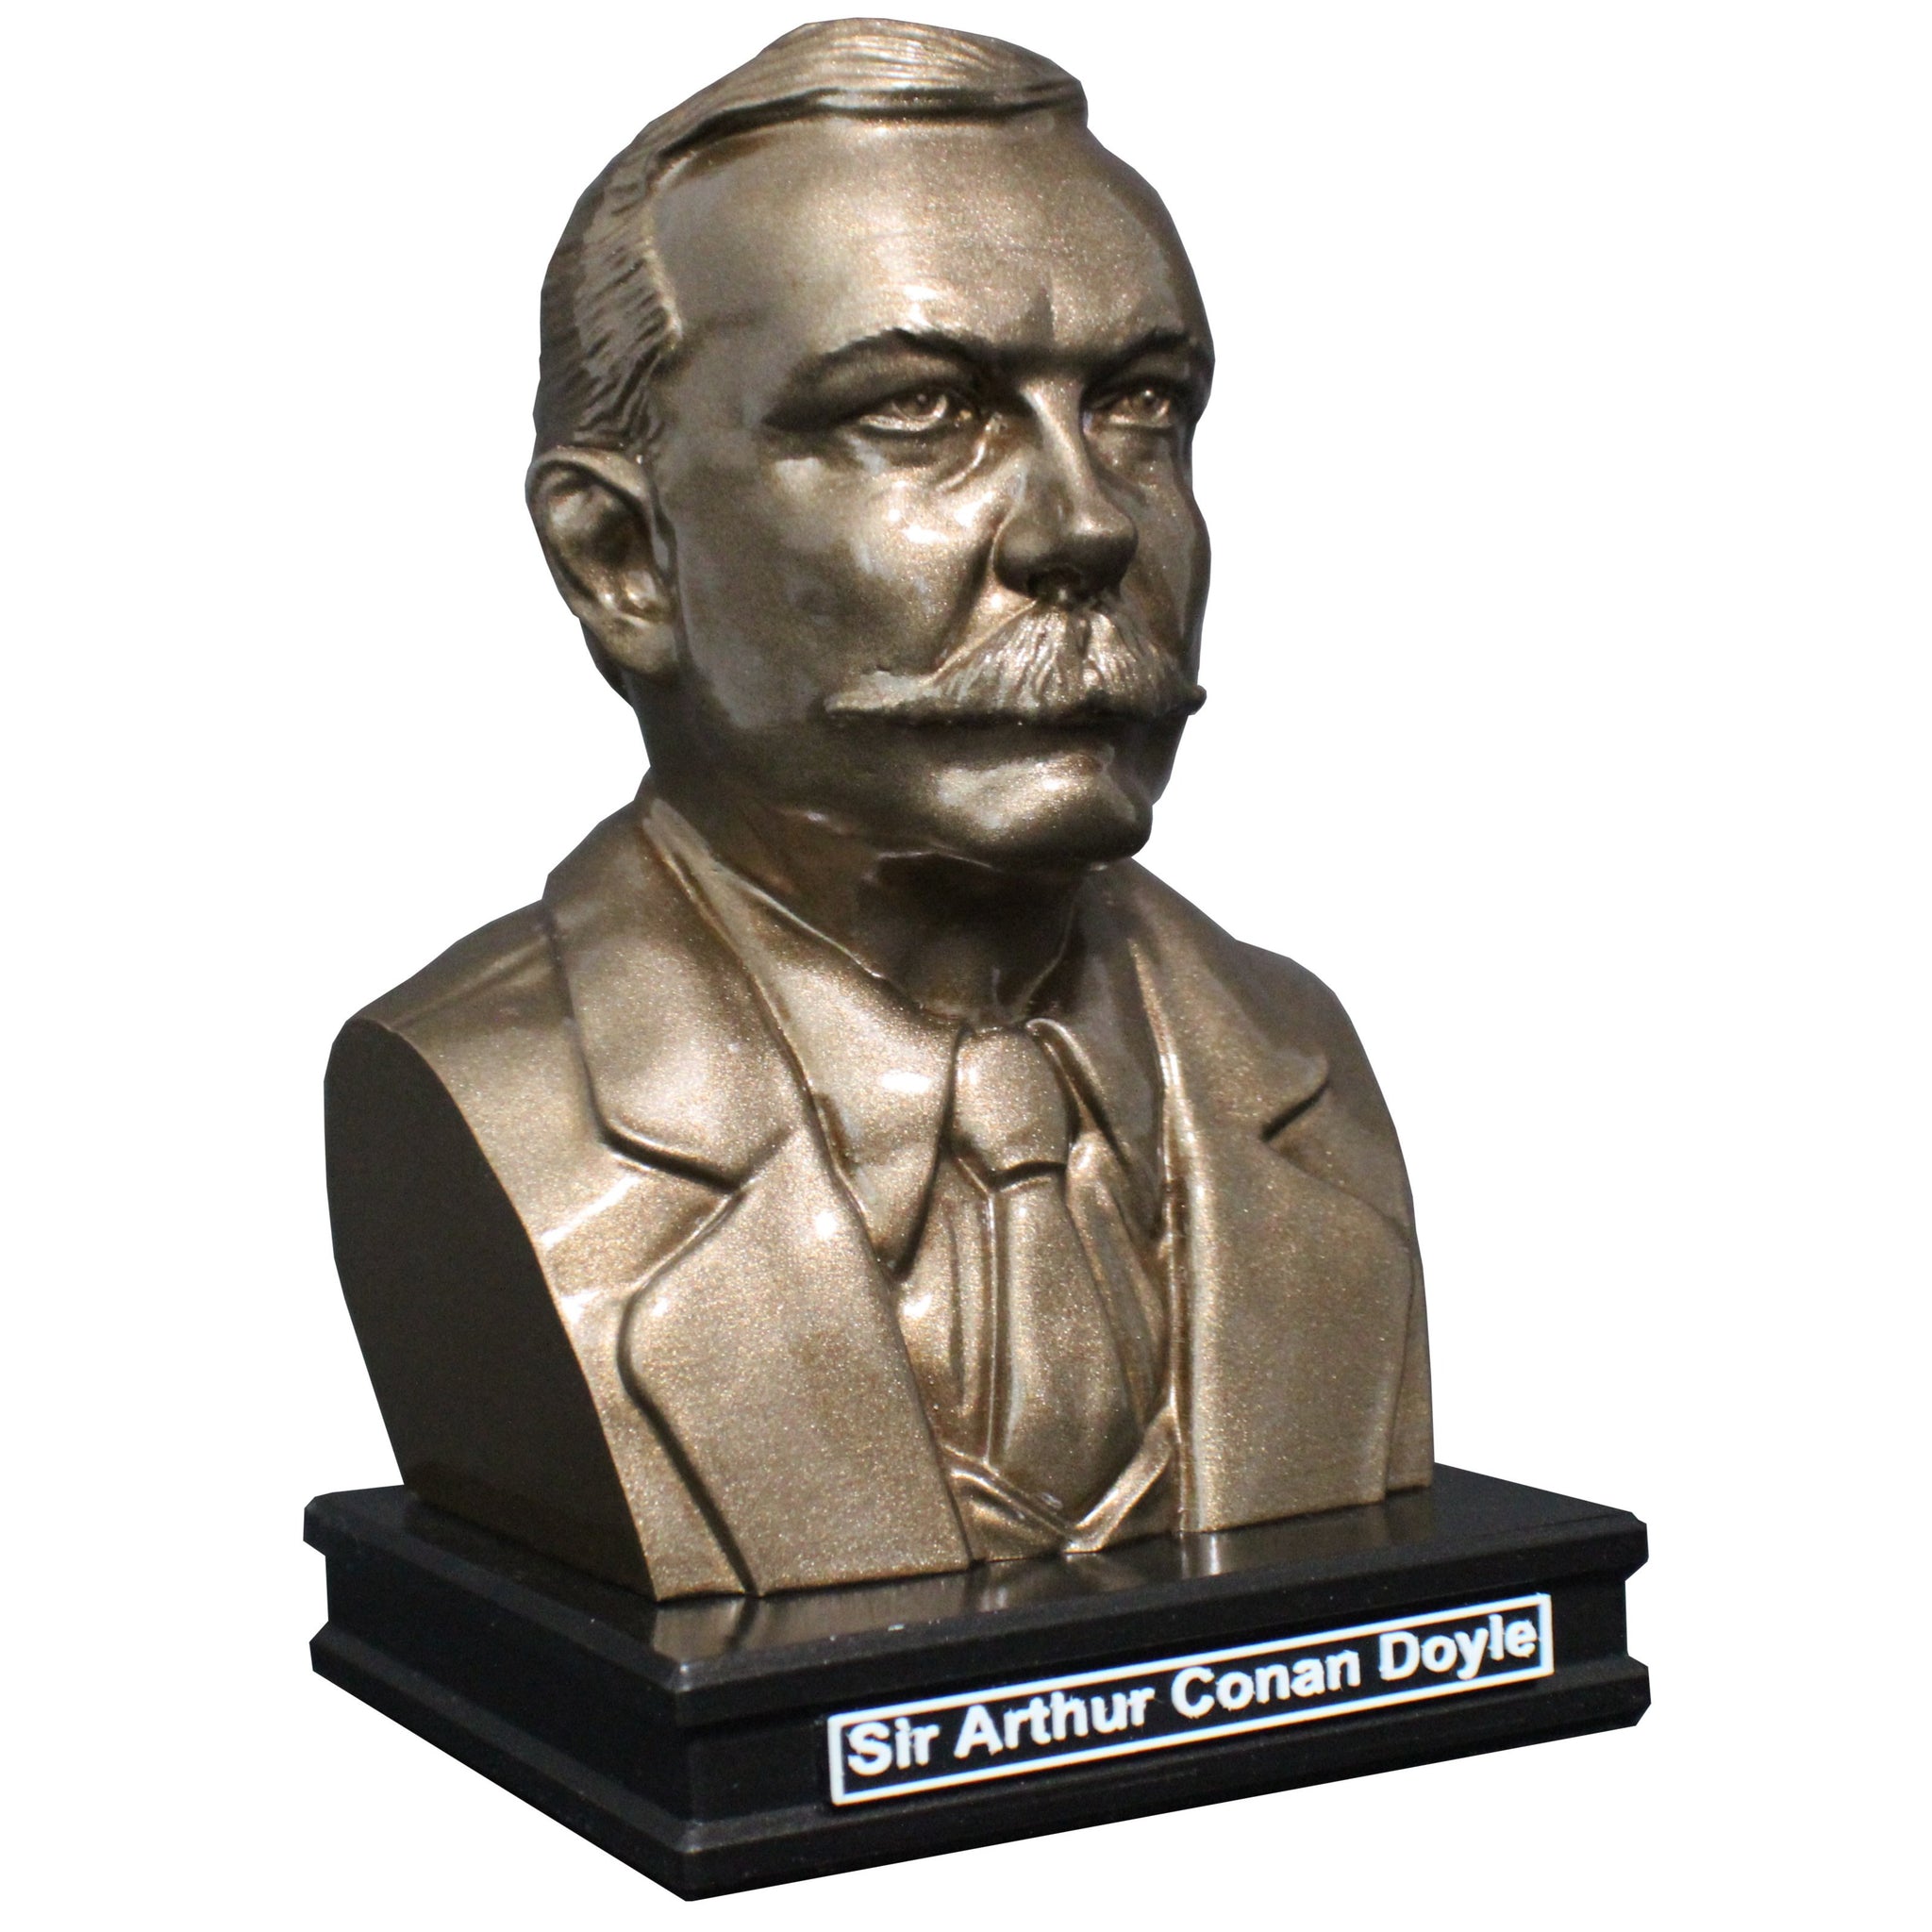 Arthur Conan Doyle, British Writer, Premium Sculpture Bust